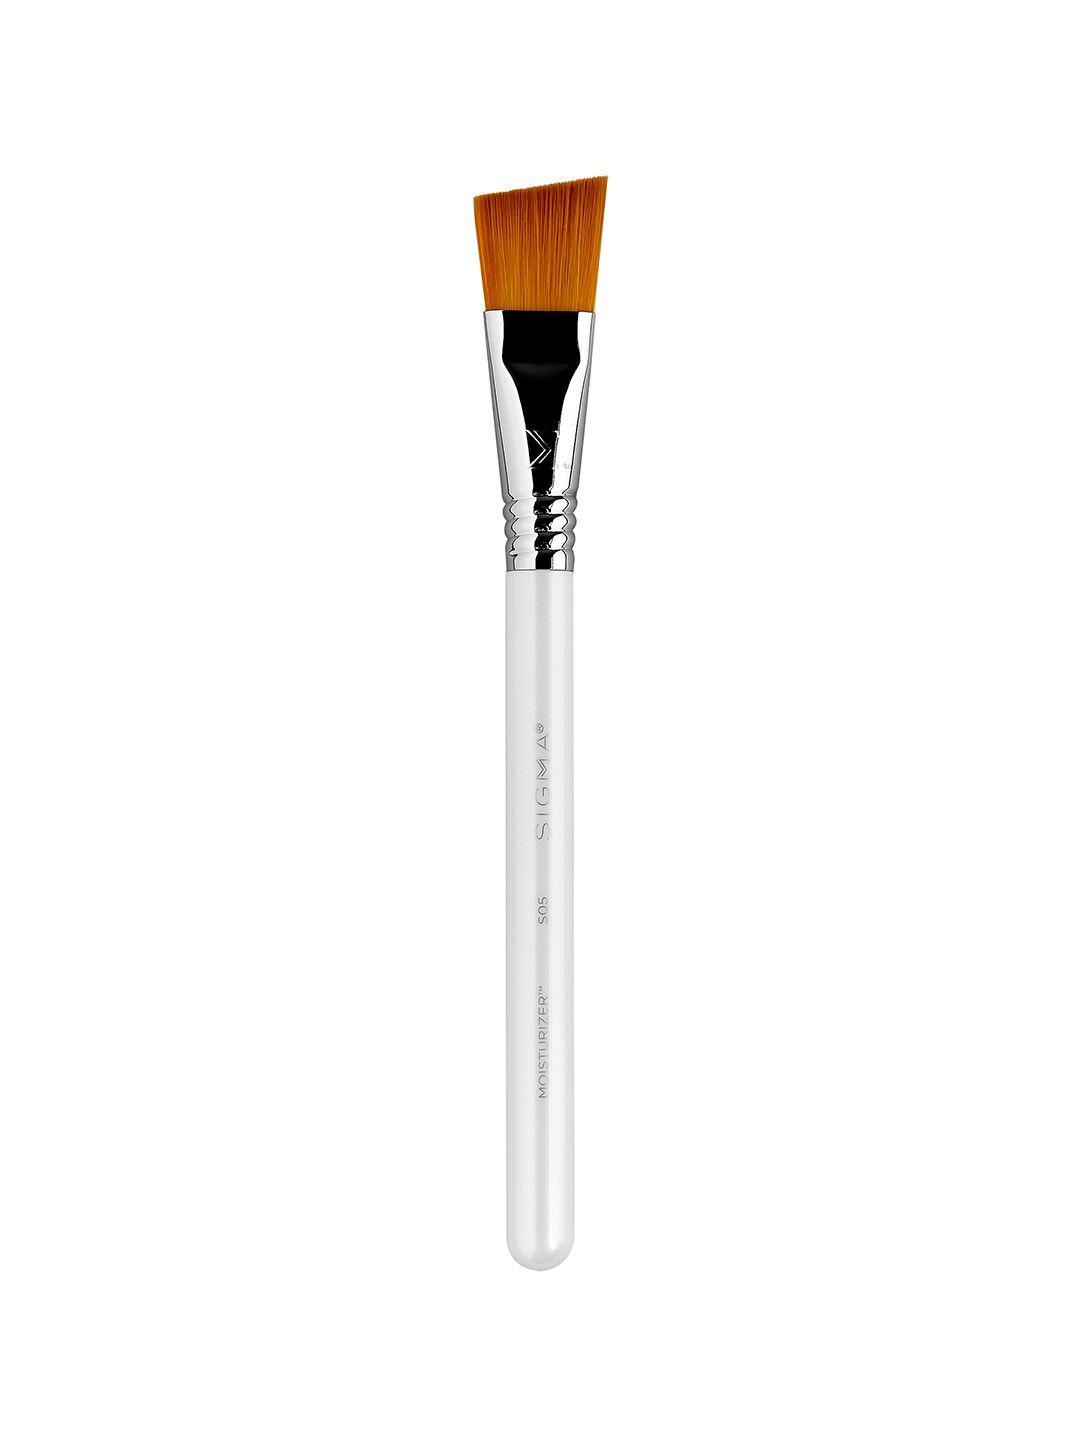 sigma beauty moisturizer brush s05 - white